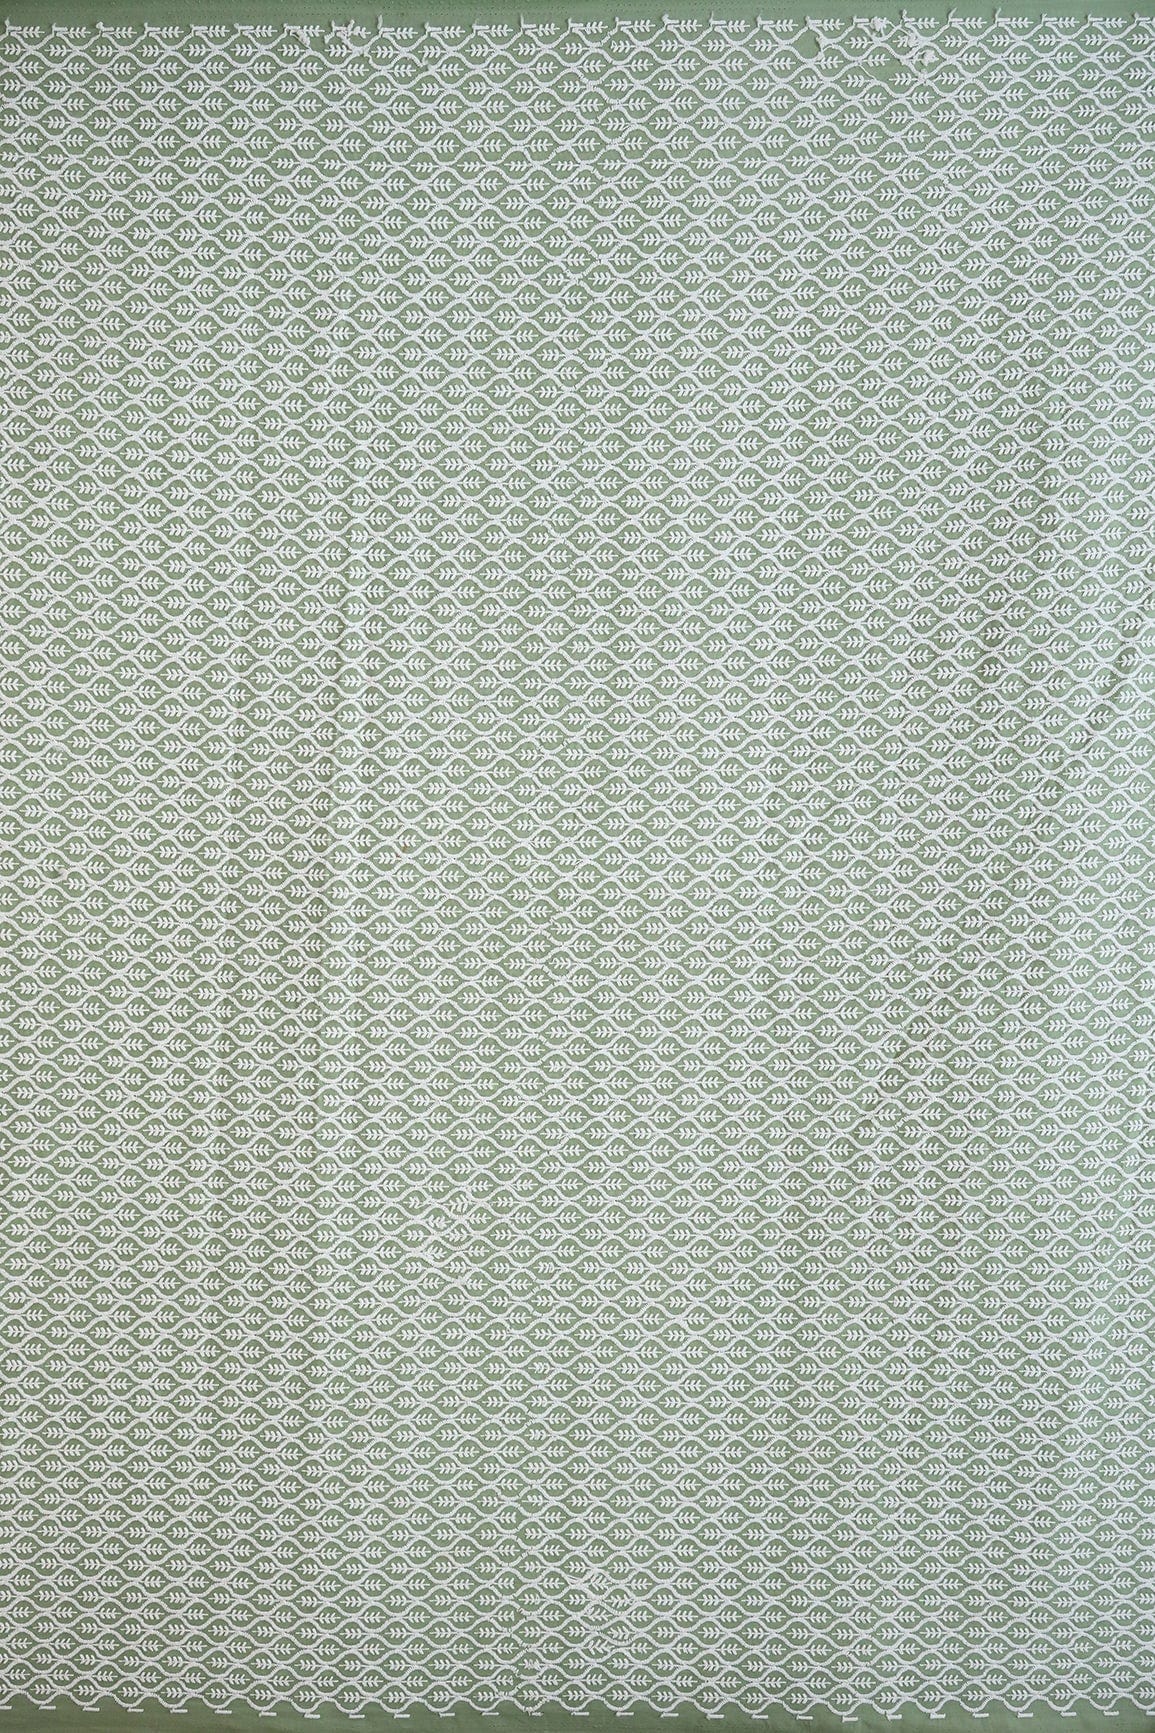 doeraa Embroidery Fabrics White Thread Beautiful Trellis Embroidery On Pastel Green Soft Cotton Fabric